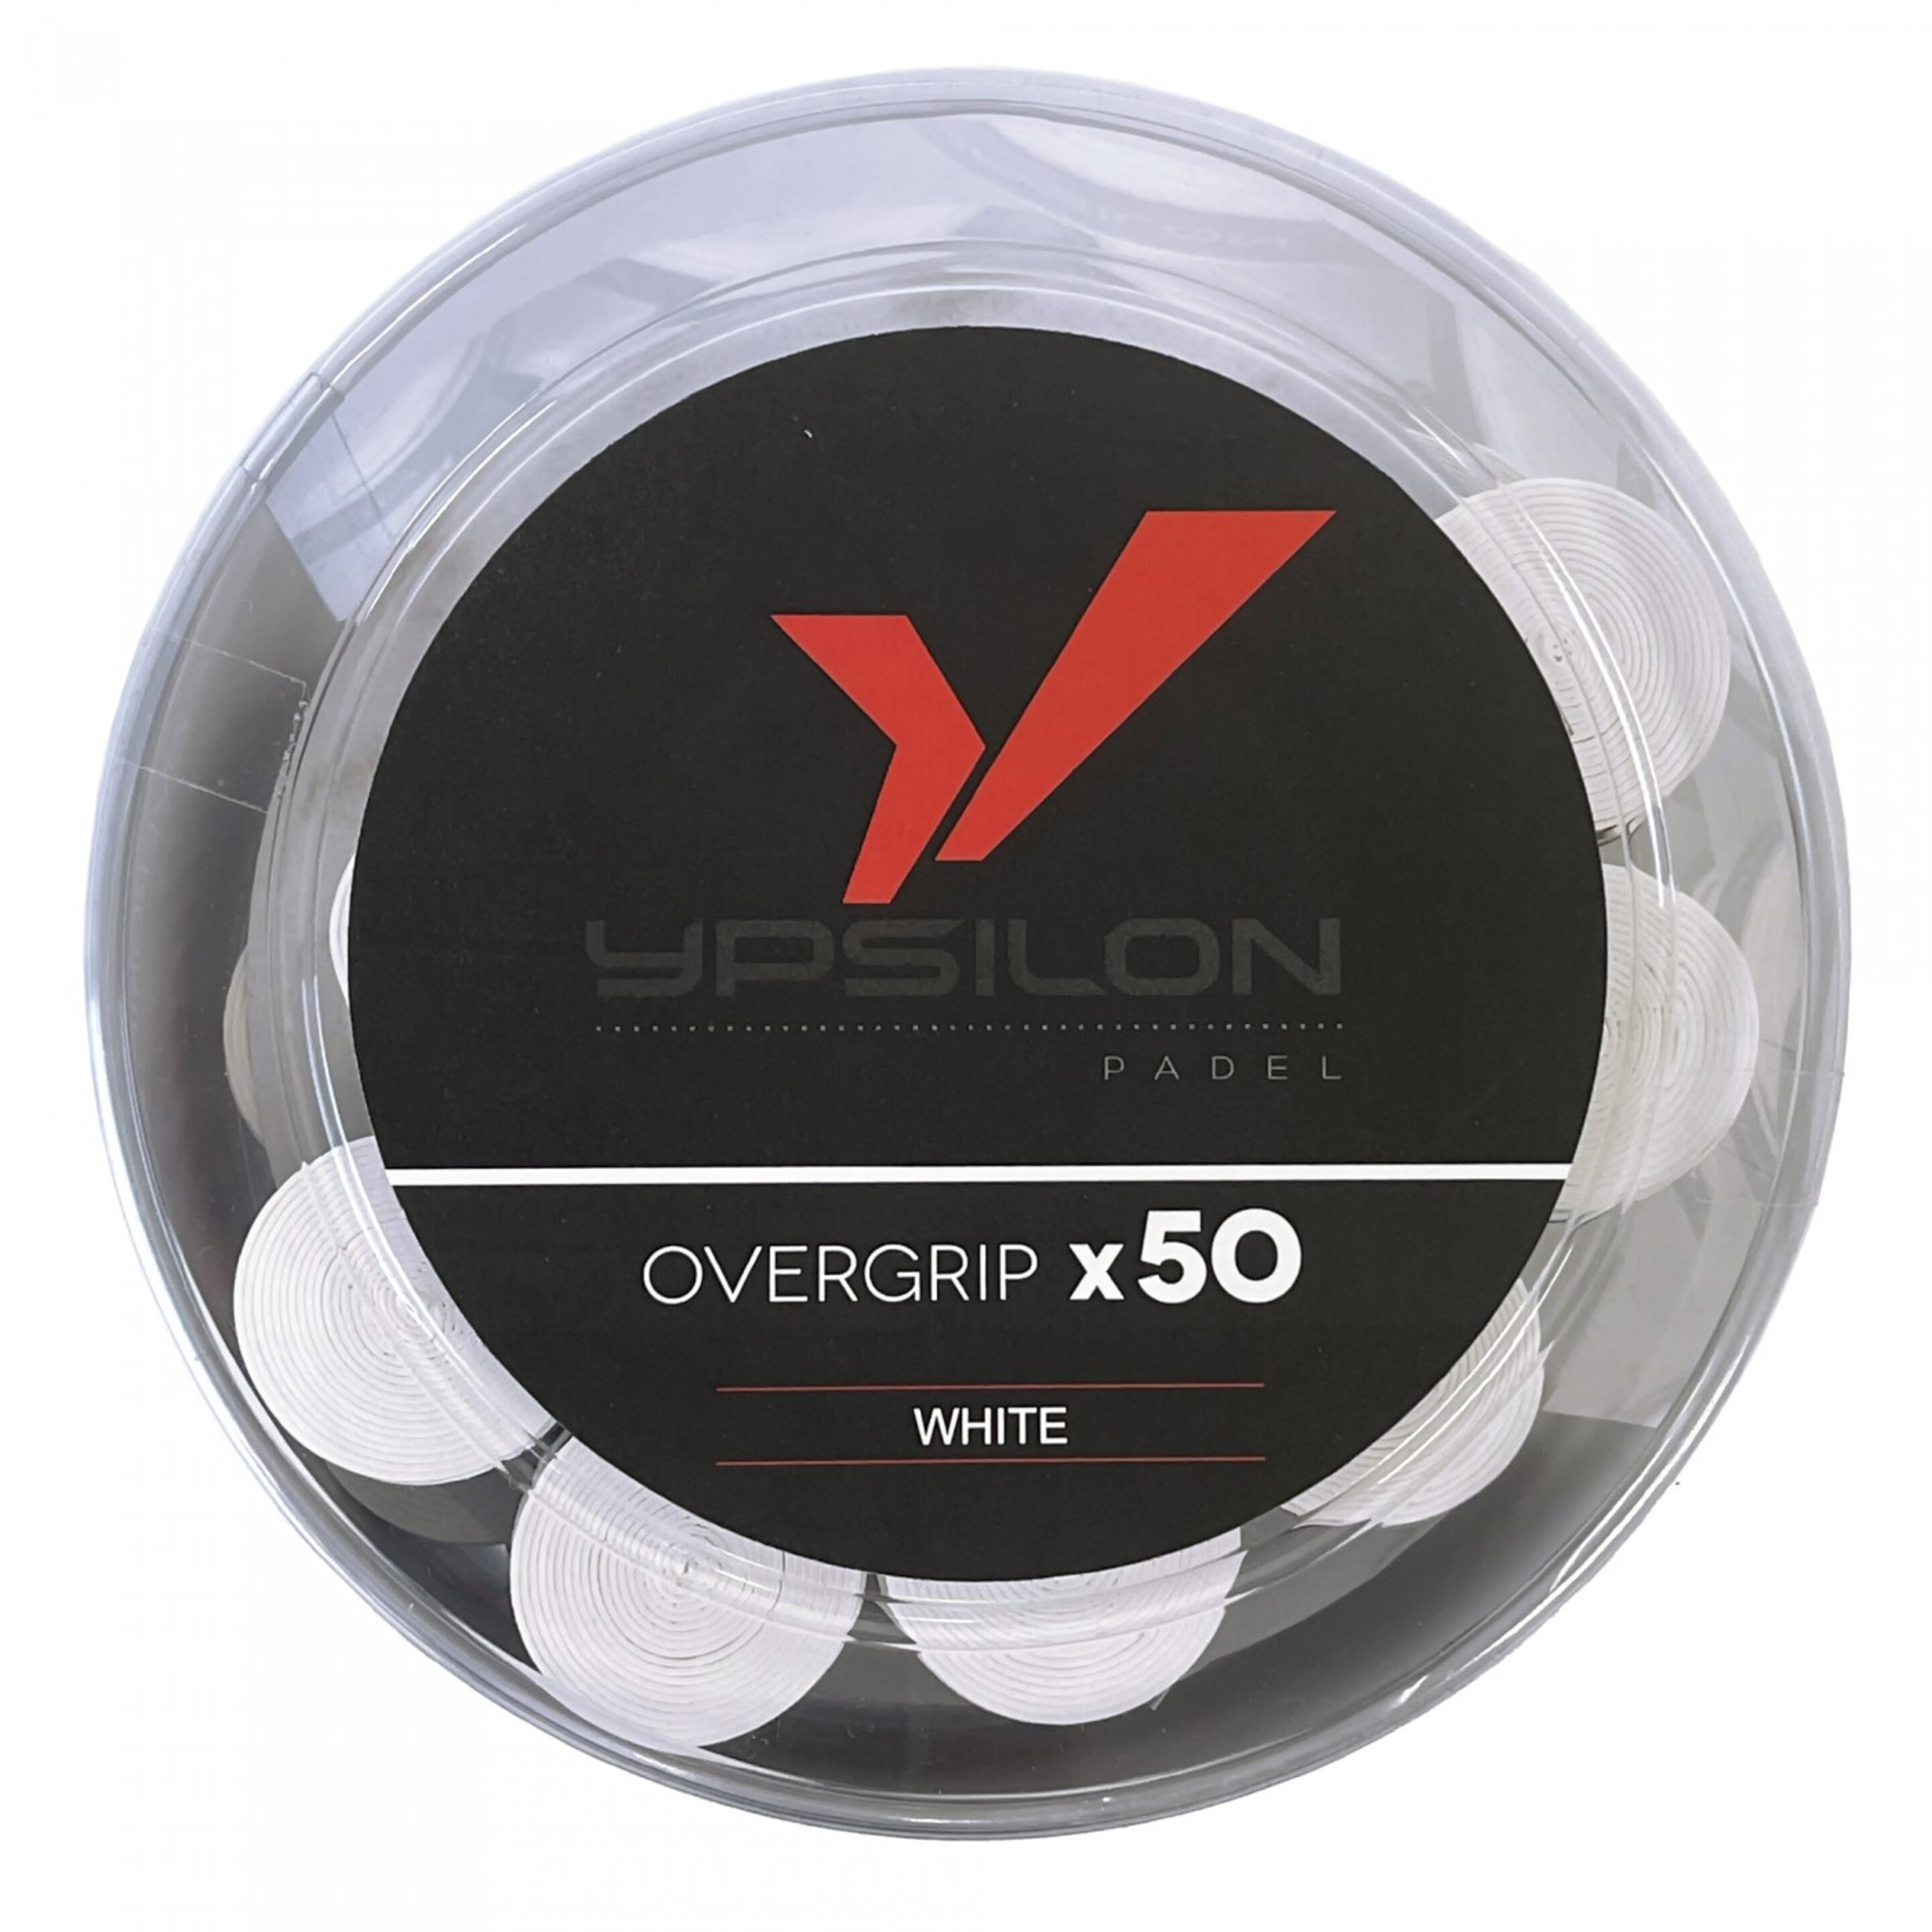 Tambor 50 Overgrips Ypsilon Comfort White